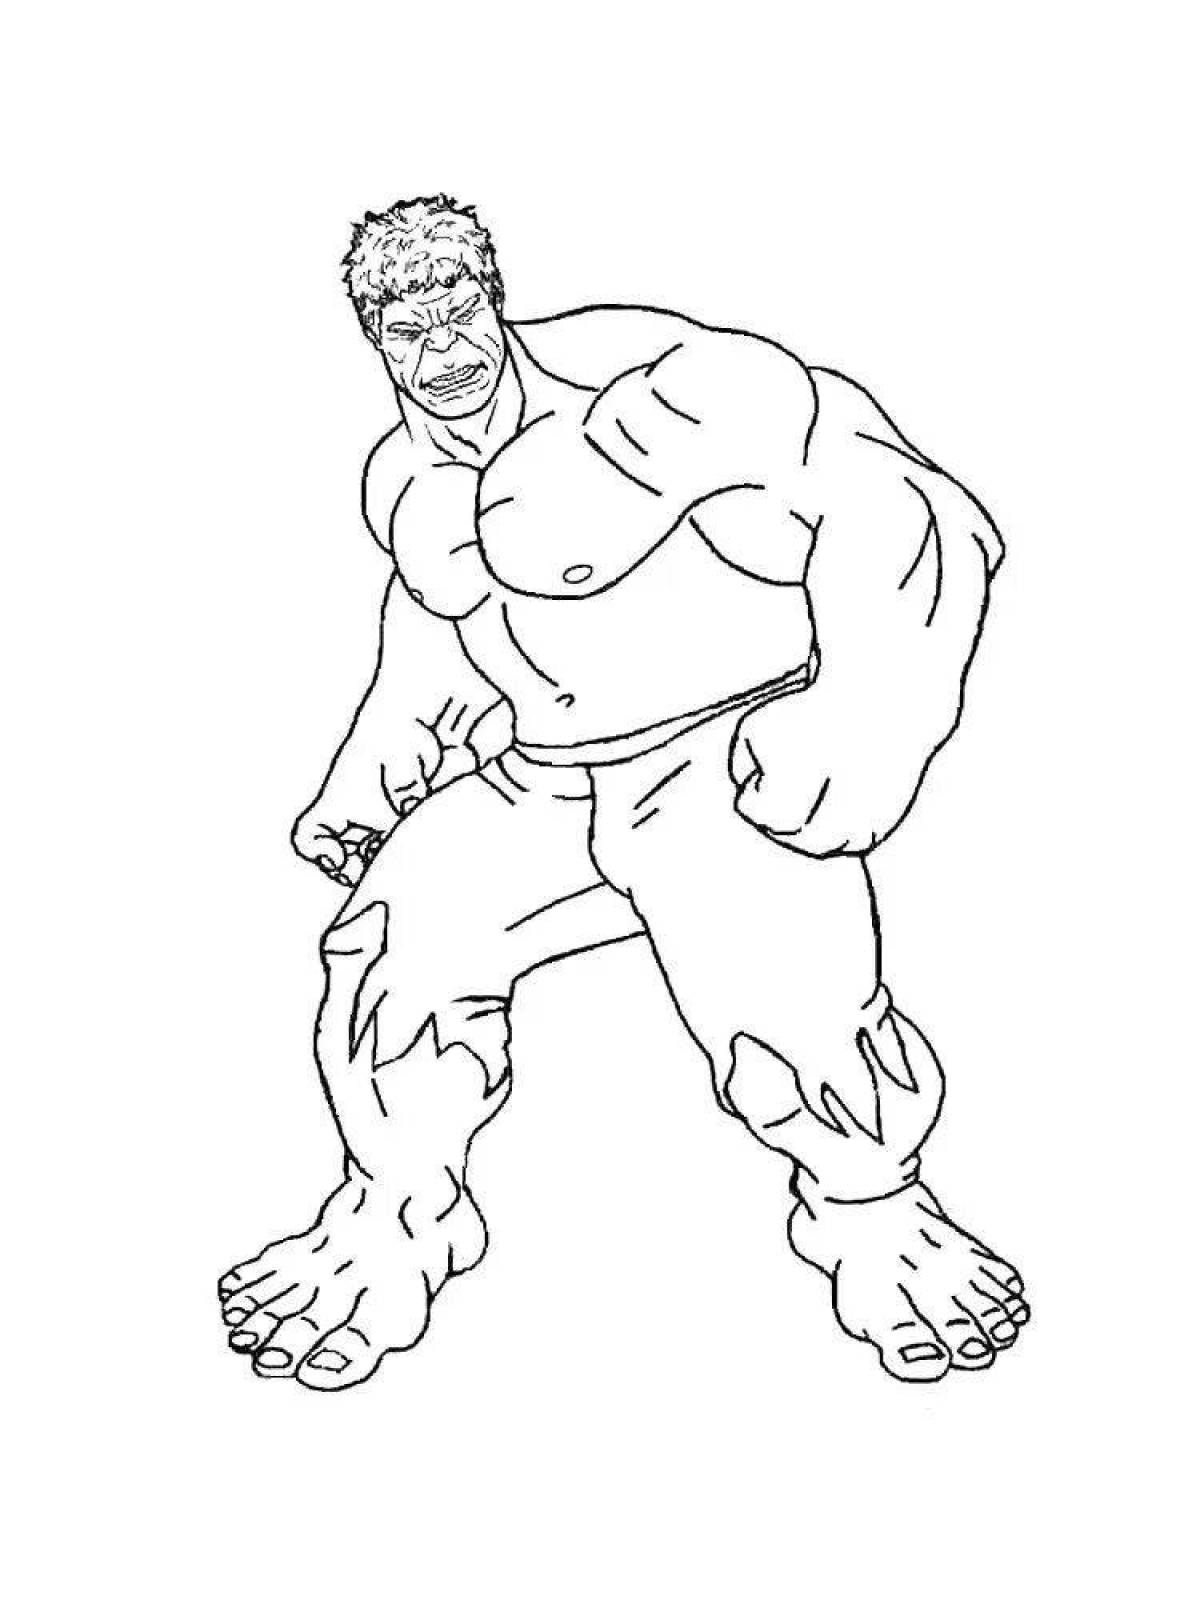 Glorious Hulk coloring page